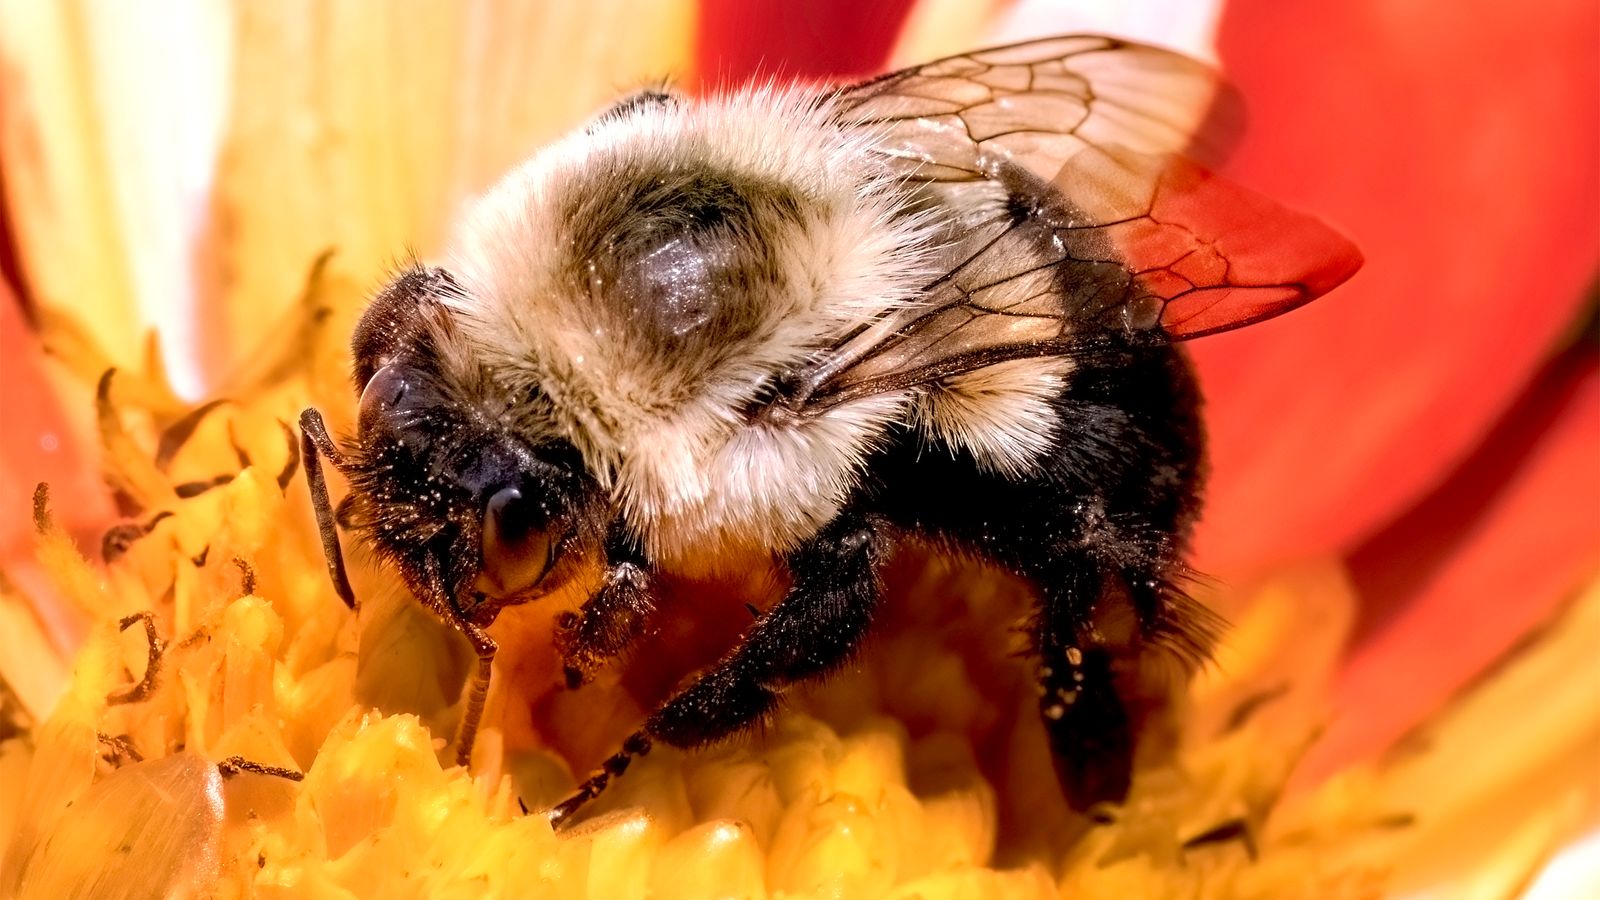 bumblebee species can survive a week underwater